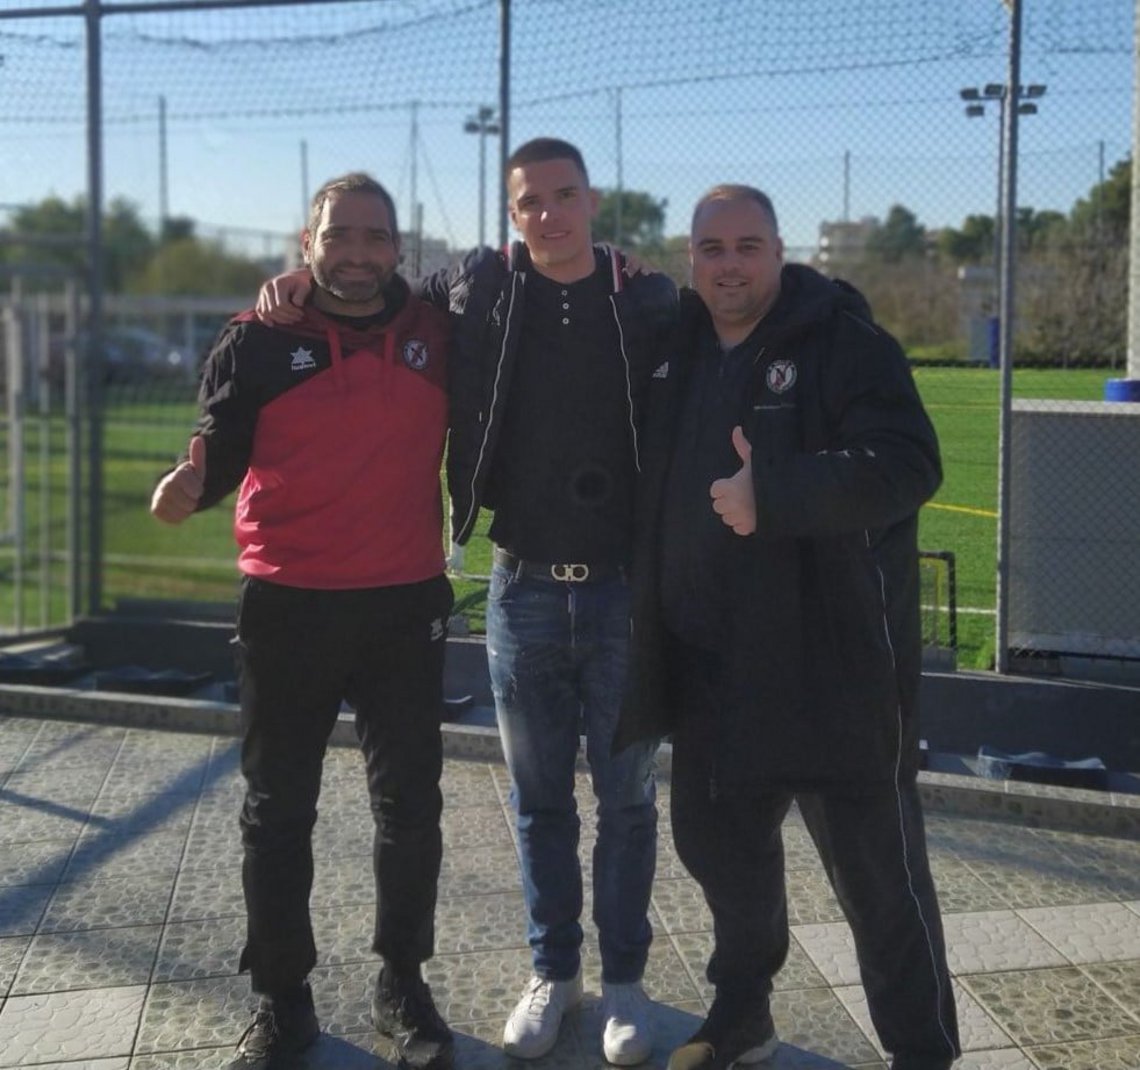 Ivo with the Varsity Soccer Coaches:Ilias Karapiperis and Spyro Paspalidis